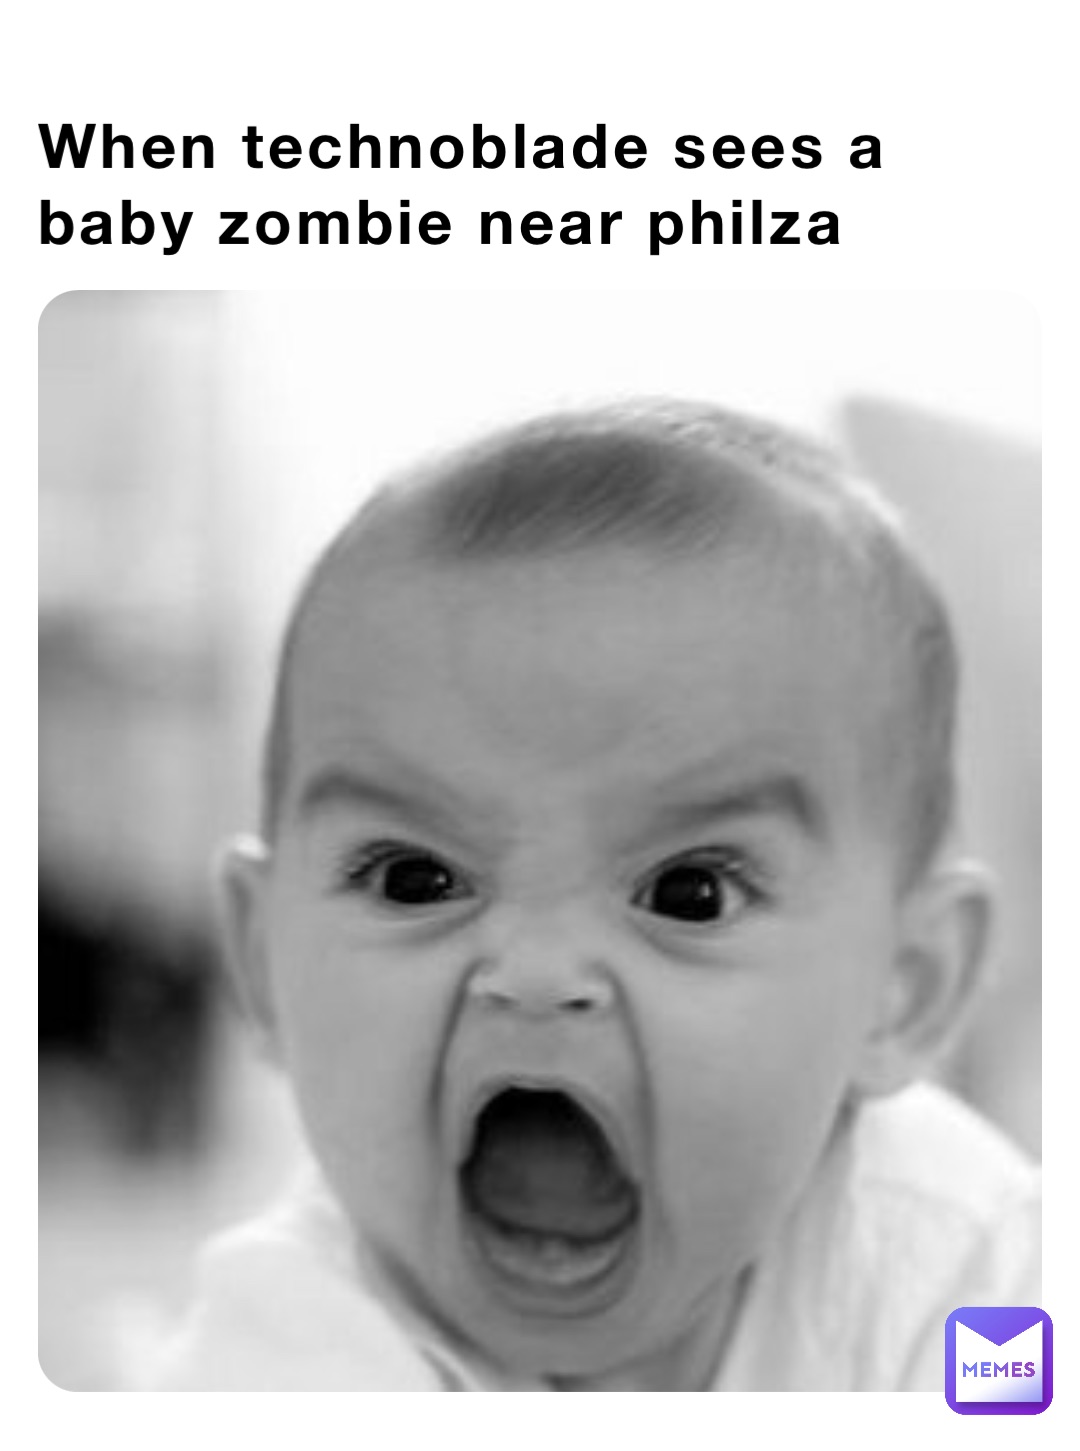 When technoblade sees a baby zombie near philza